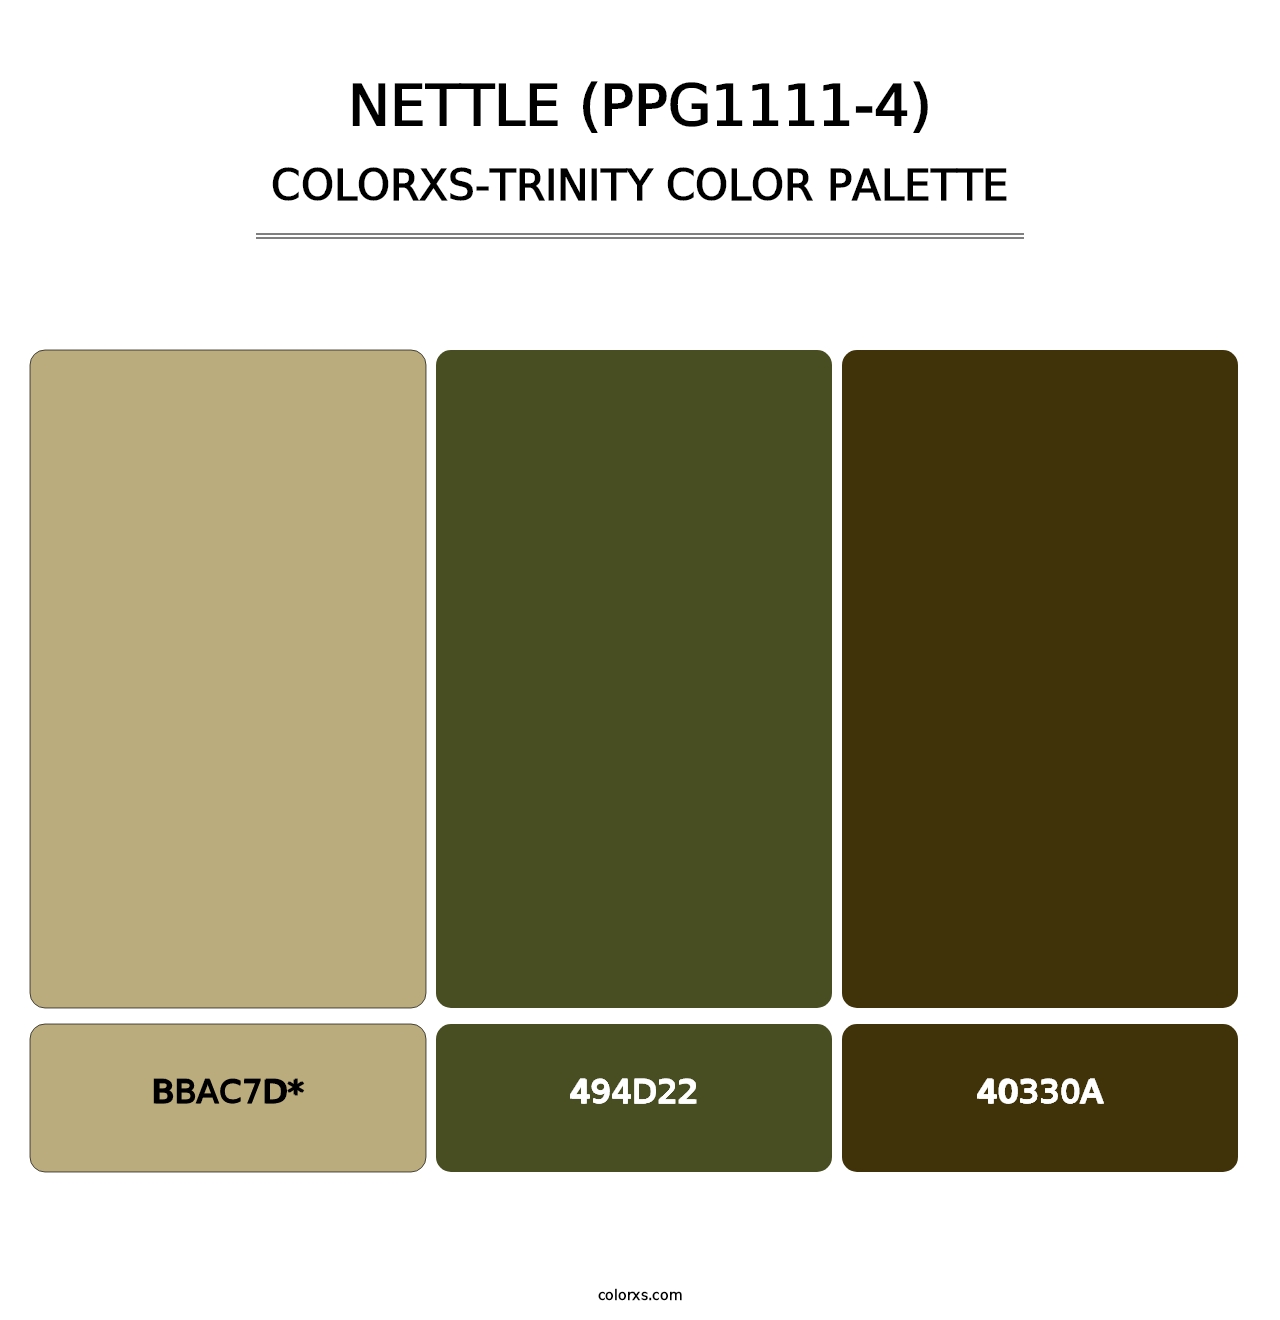 Nettle (PPG1111-4) - Colorxs Trinity Palette